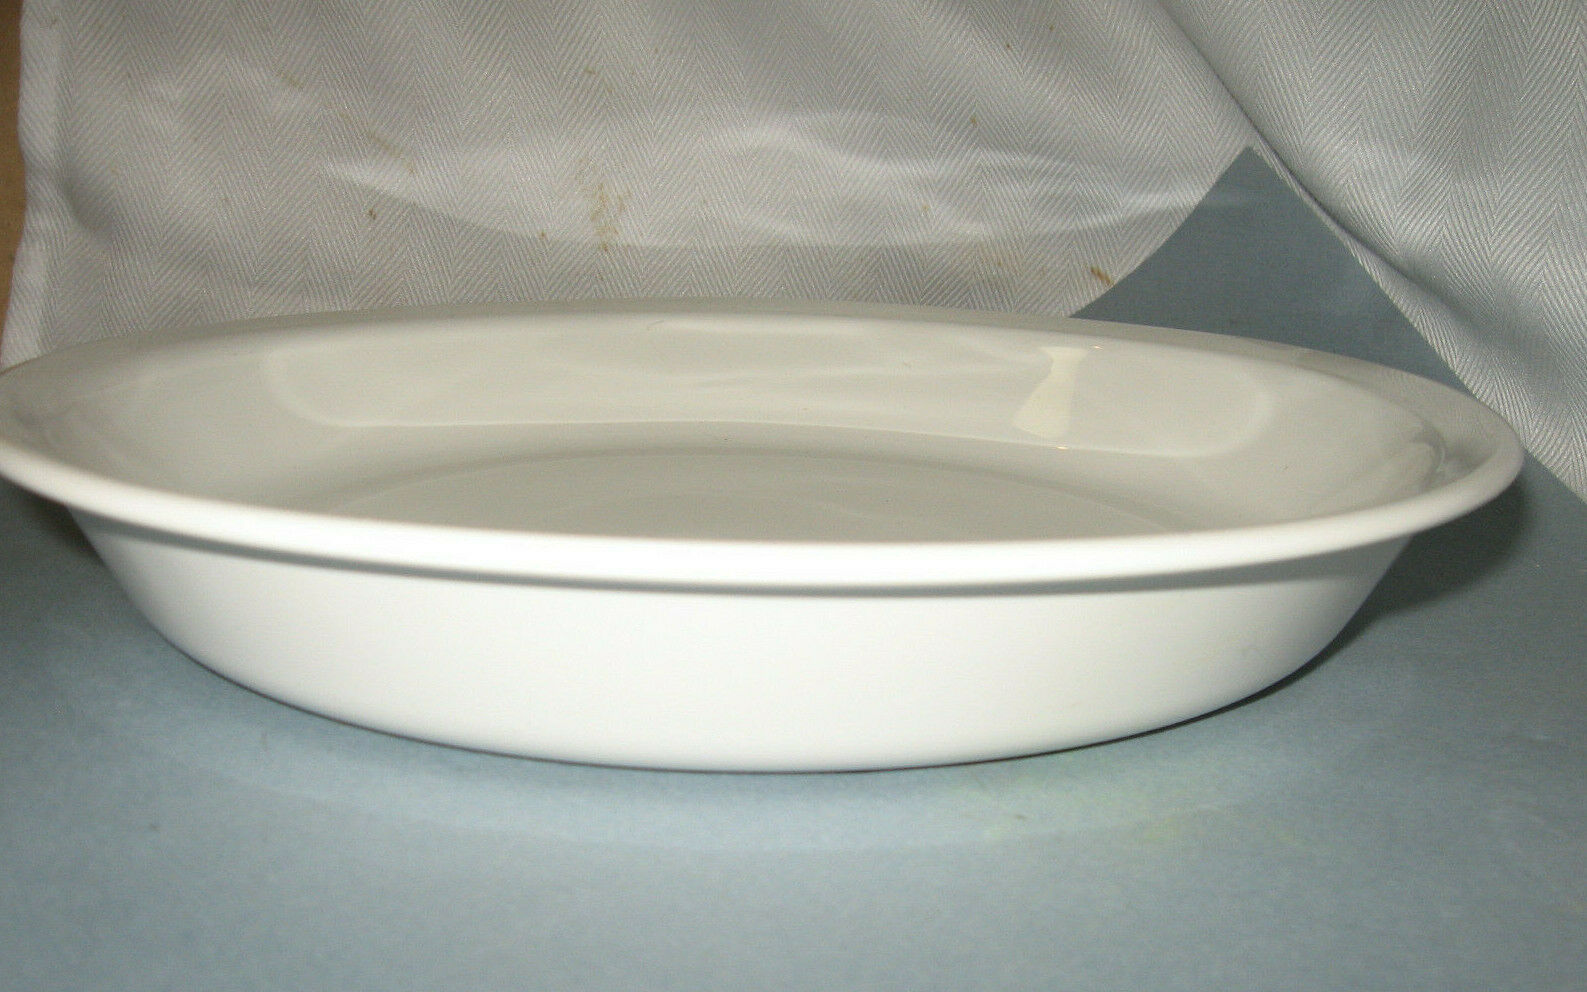 White Corning Ware 9" X 1/4" Pie Plate #309 Usa Range, Oven, Microwave